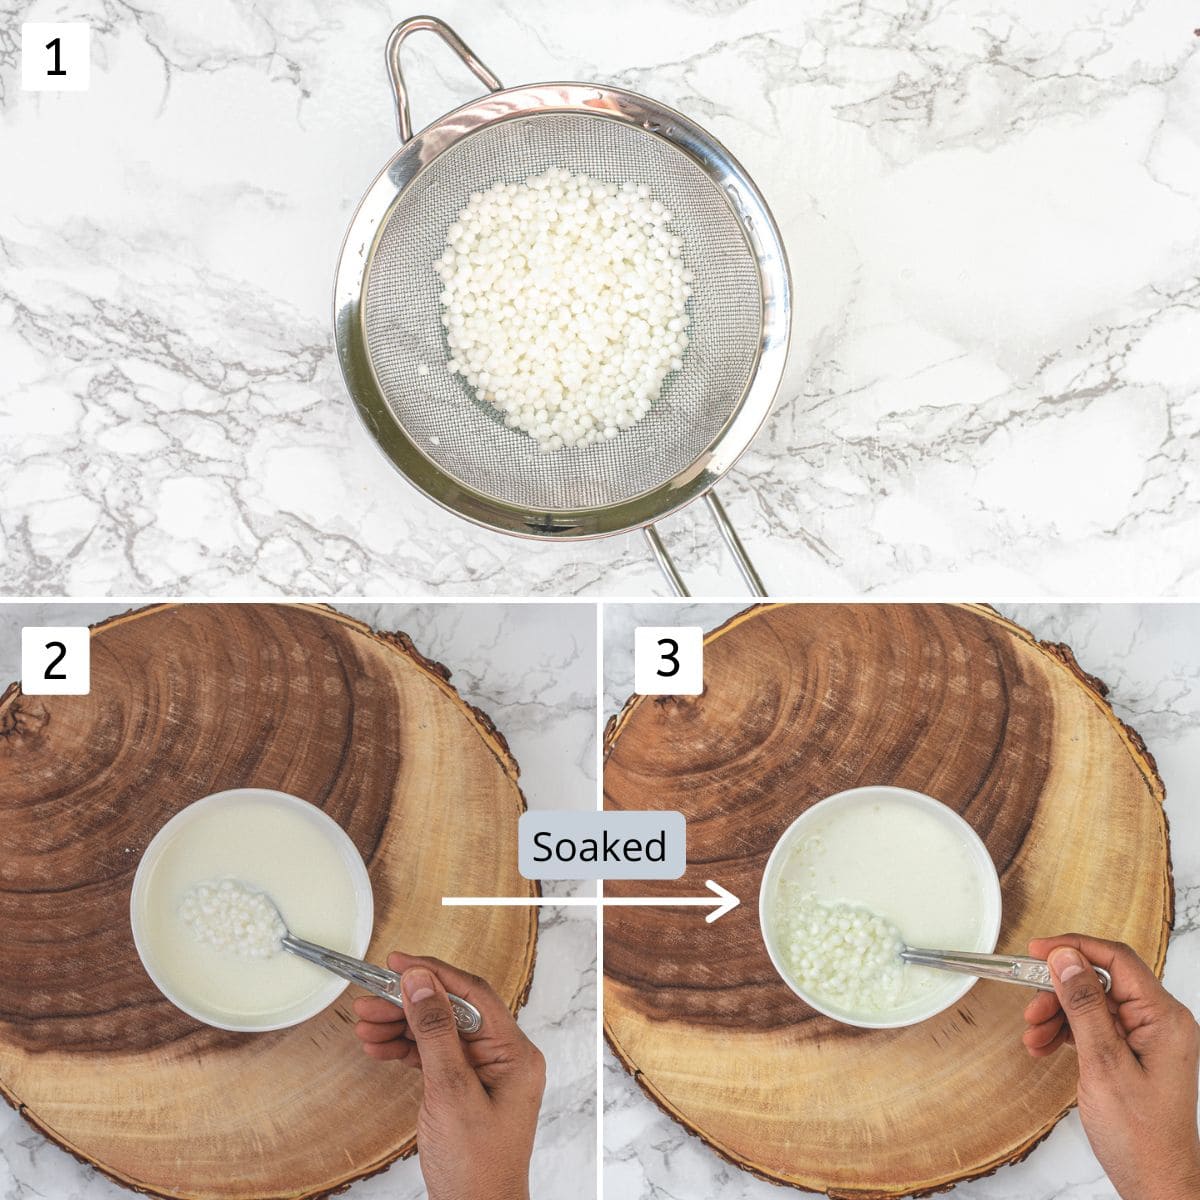 Collage of 3 images showing rinsing and soaking sabundana.